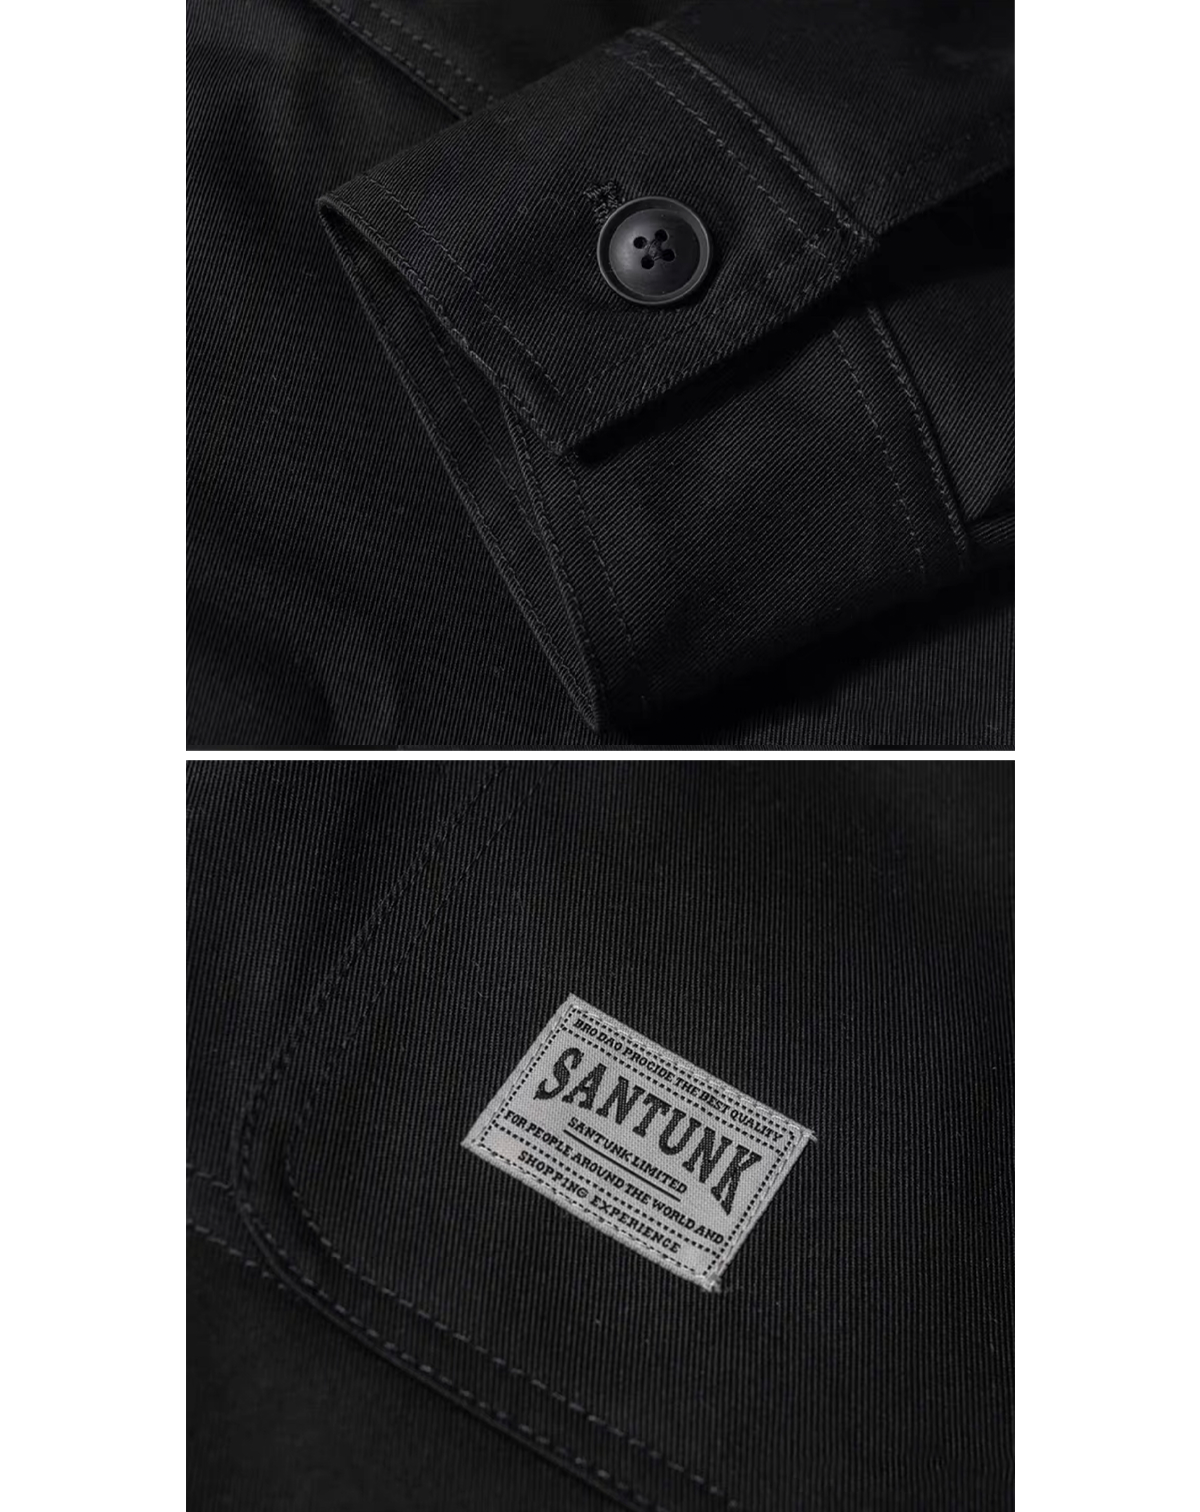 572 Hori Workwear Utilitarian Jacket